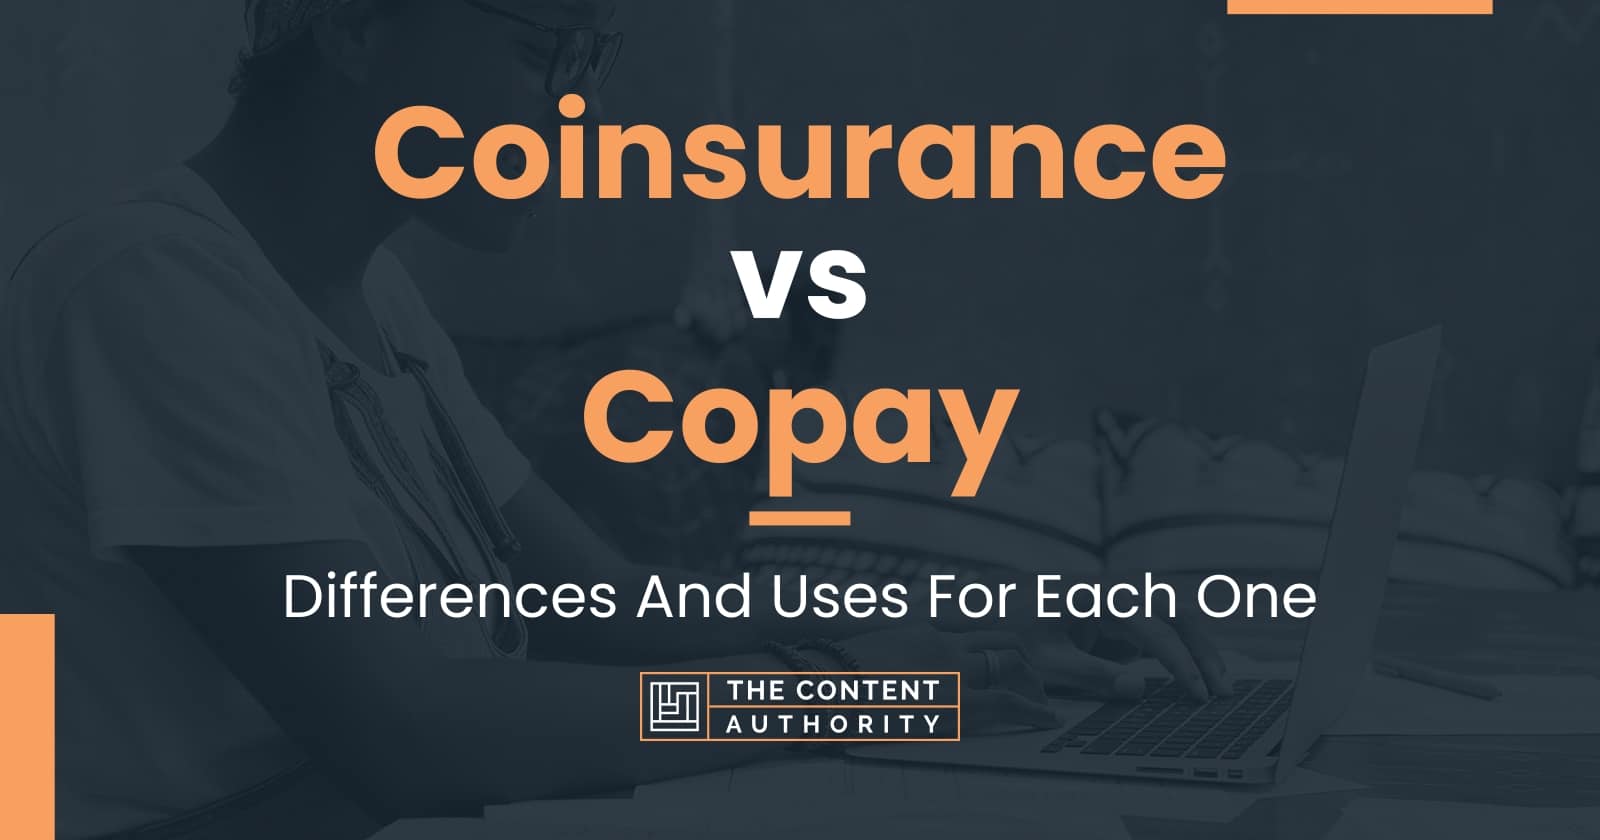 20 coinsurance vs copay